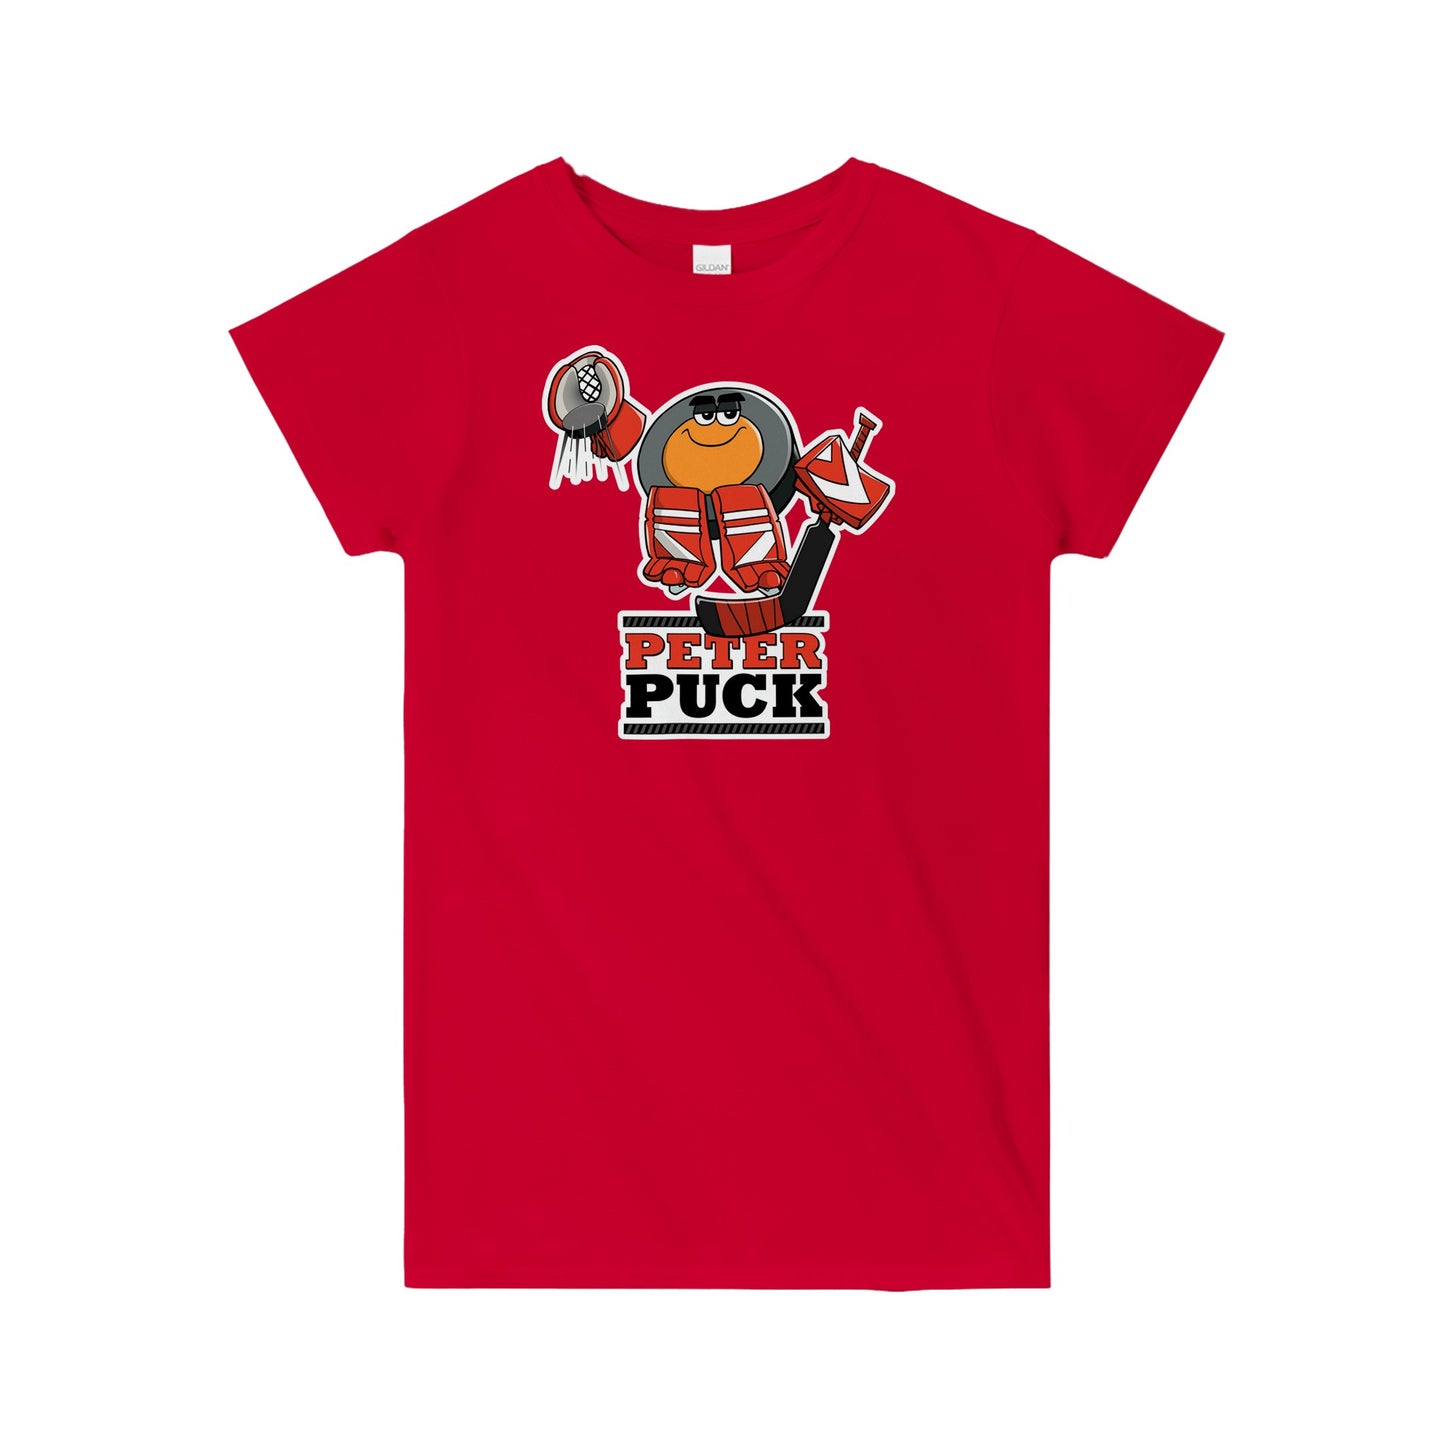 Peter Puck Plays Goalie Classic Womens Crewneck T-shirt